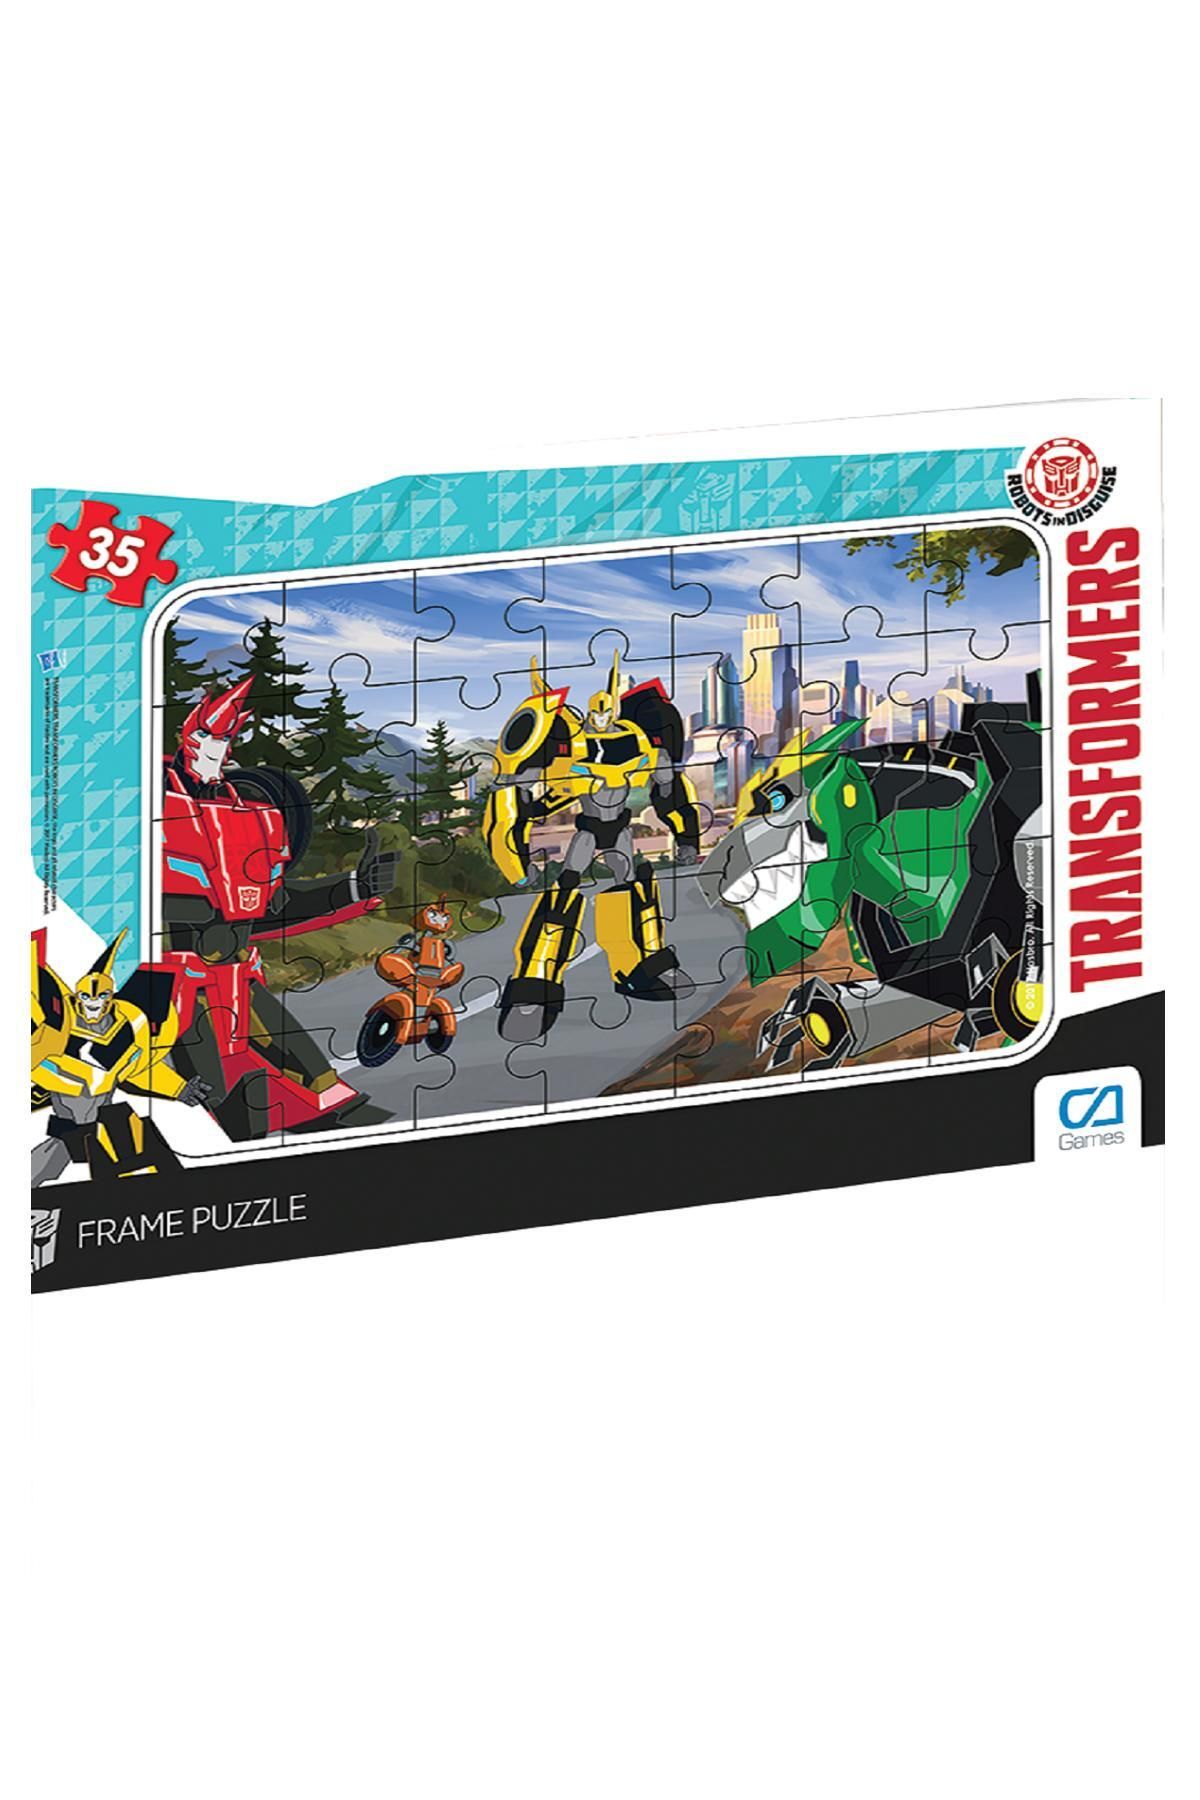 Genel Markalar Ca Games 5016-5017 Transformers Frame Puzzle 35